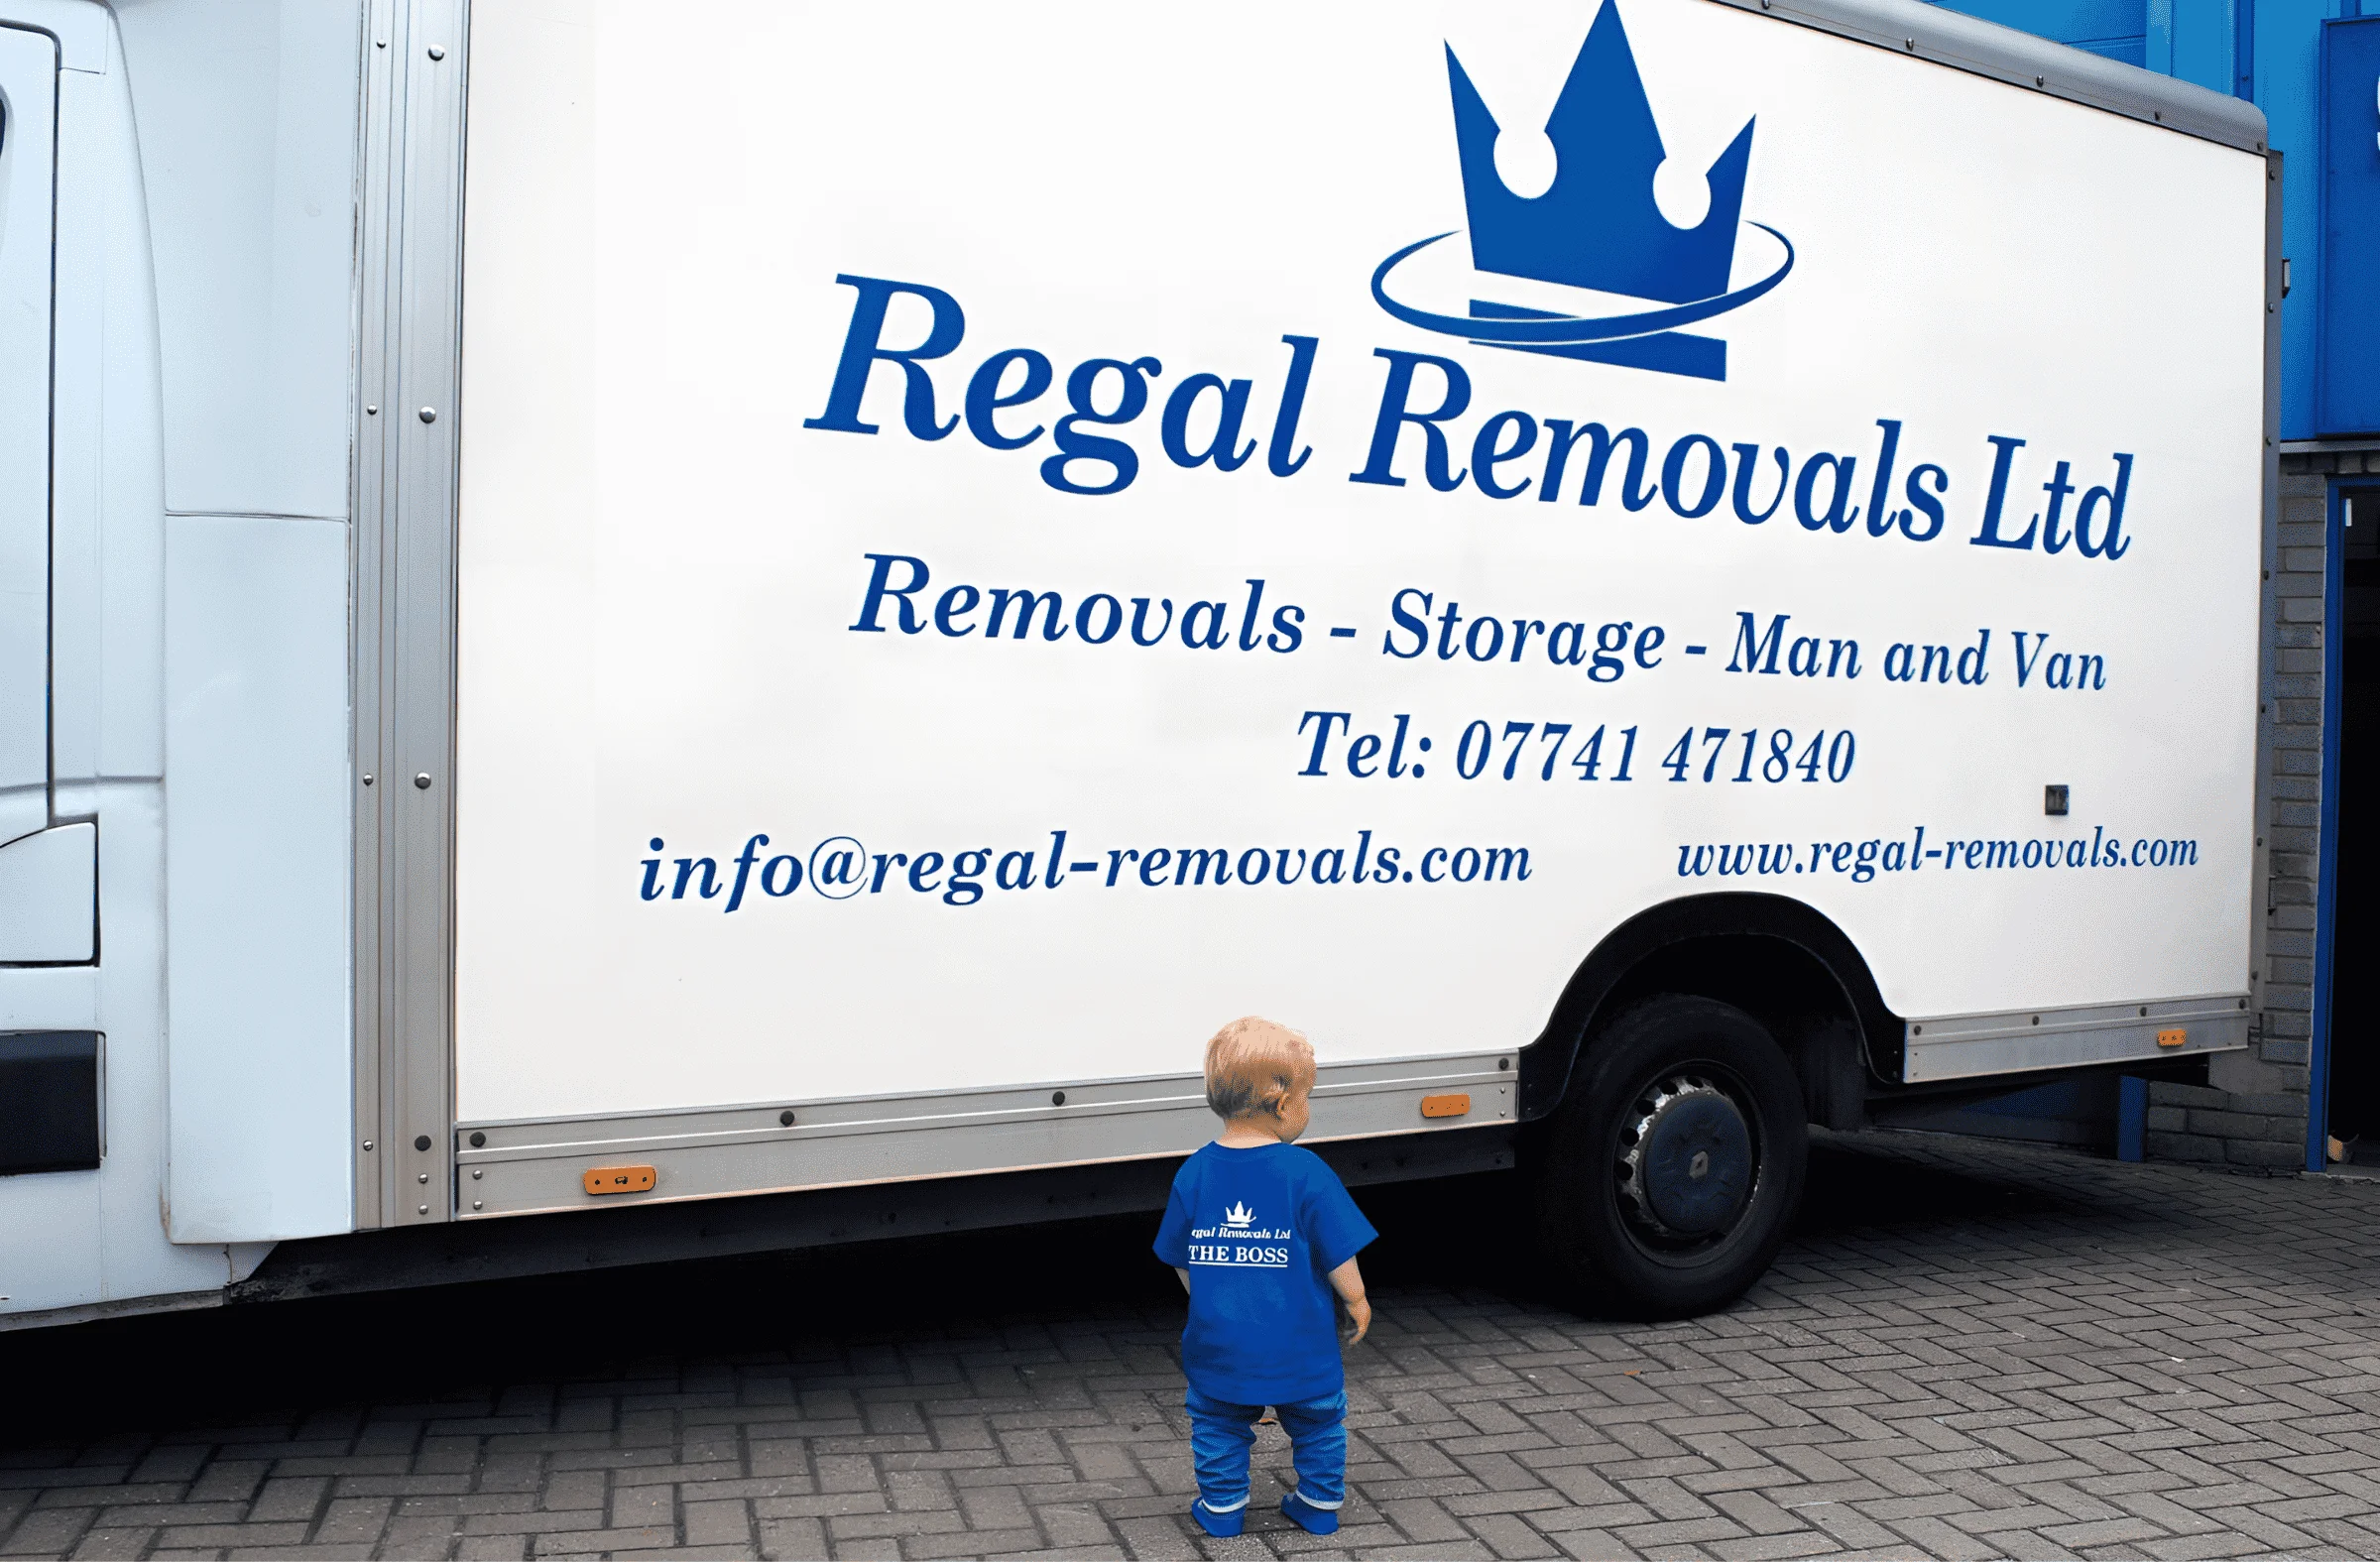 Regal Removals Ltd | RESIDENTIAL REMOVALS | COMMERCIAL REMOVALS | STORAGE